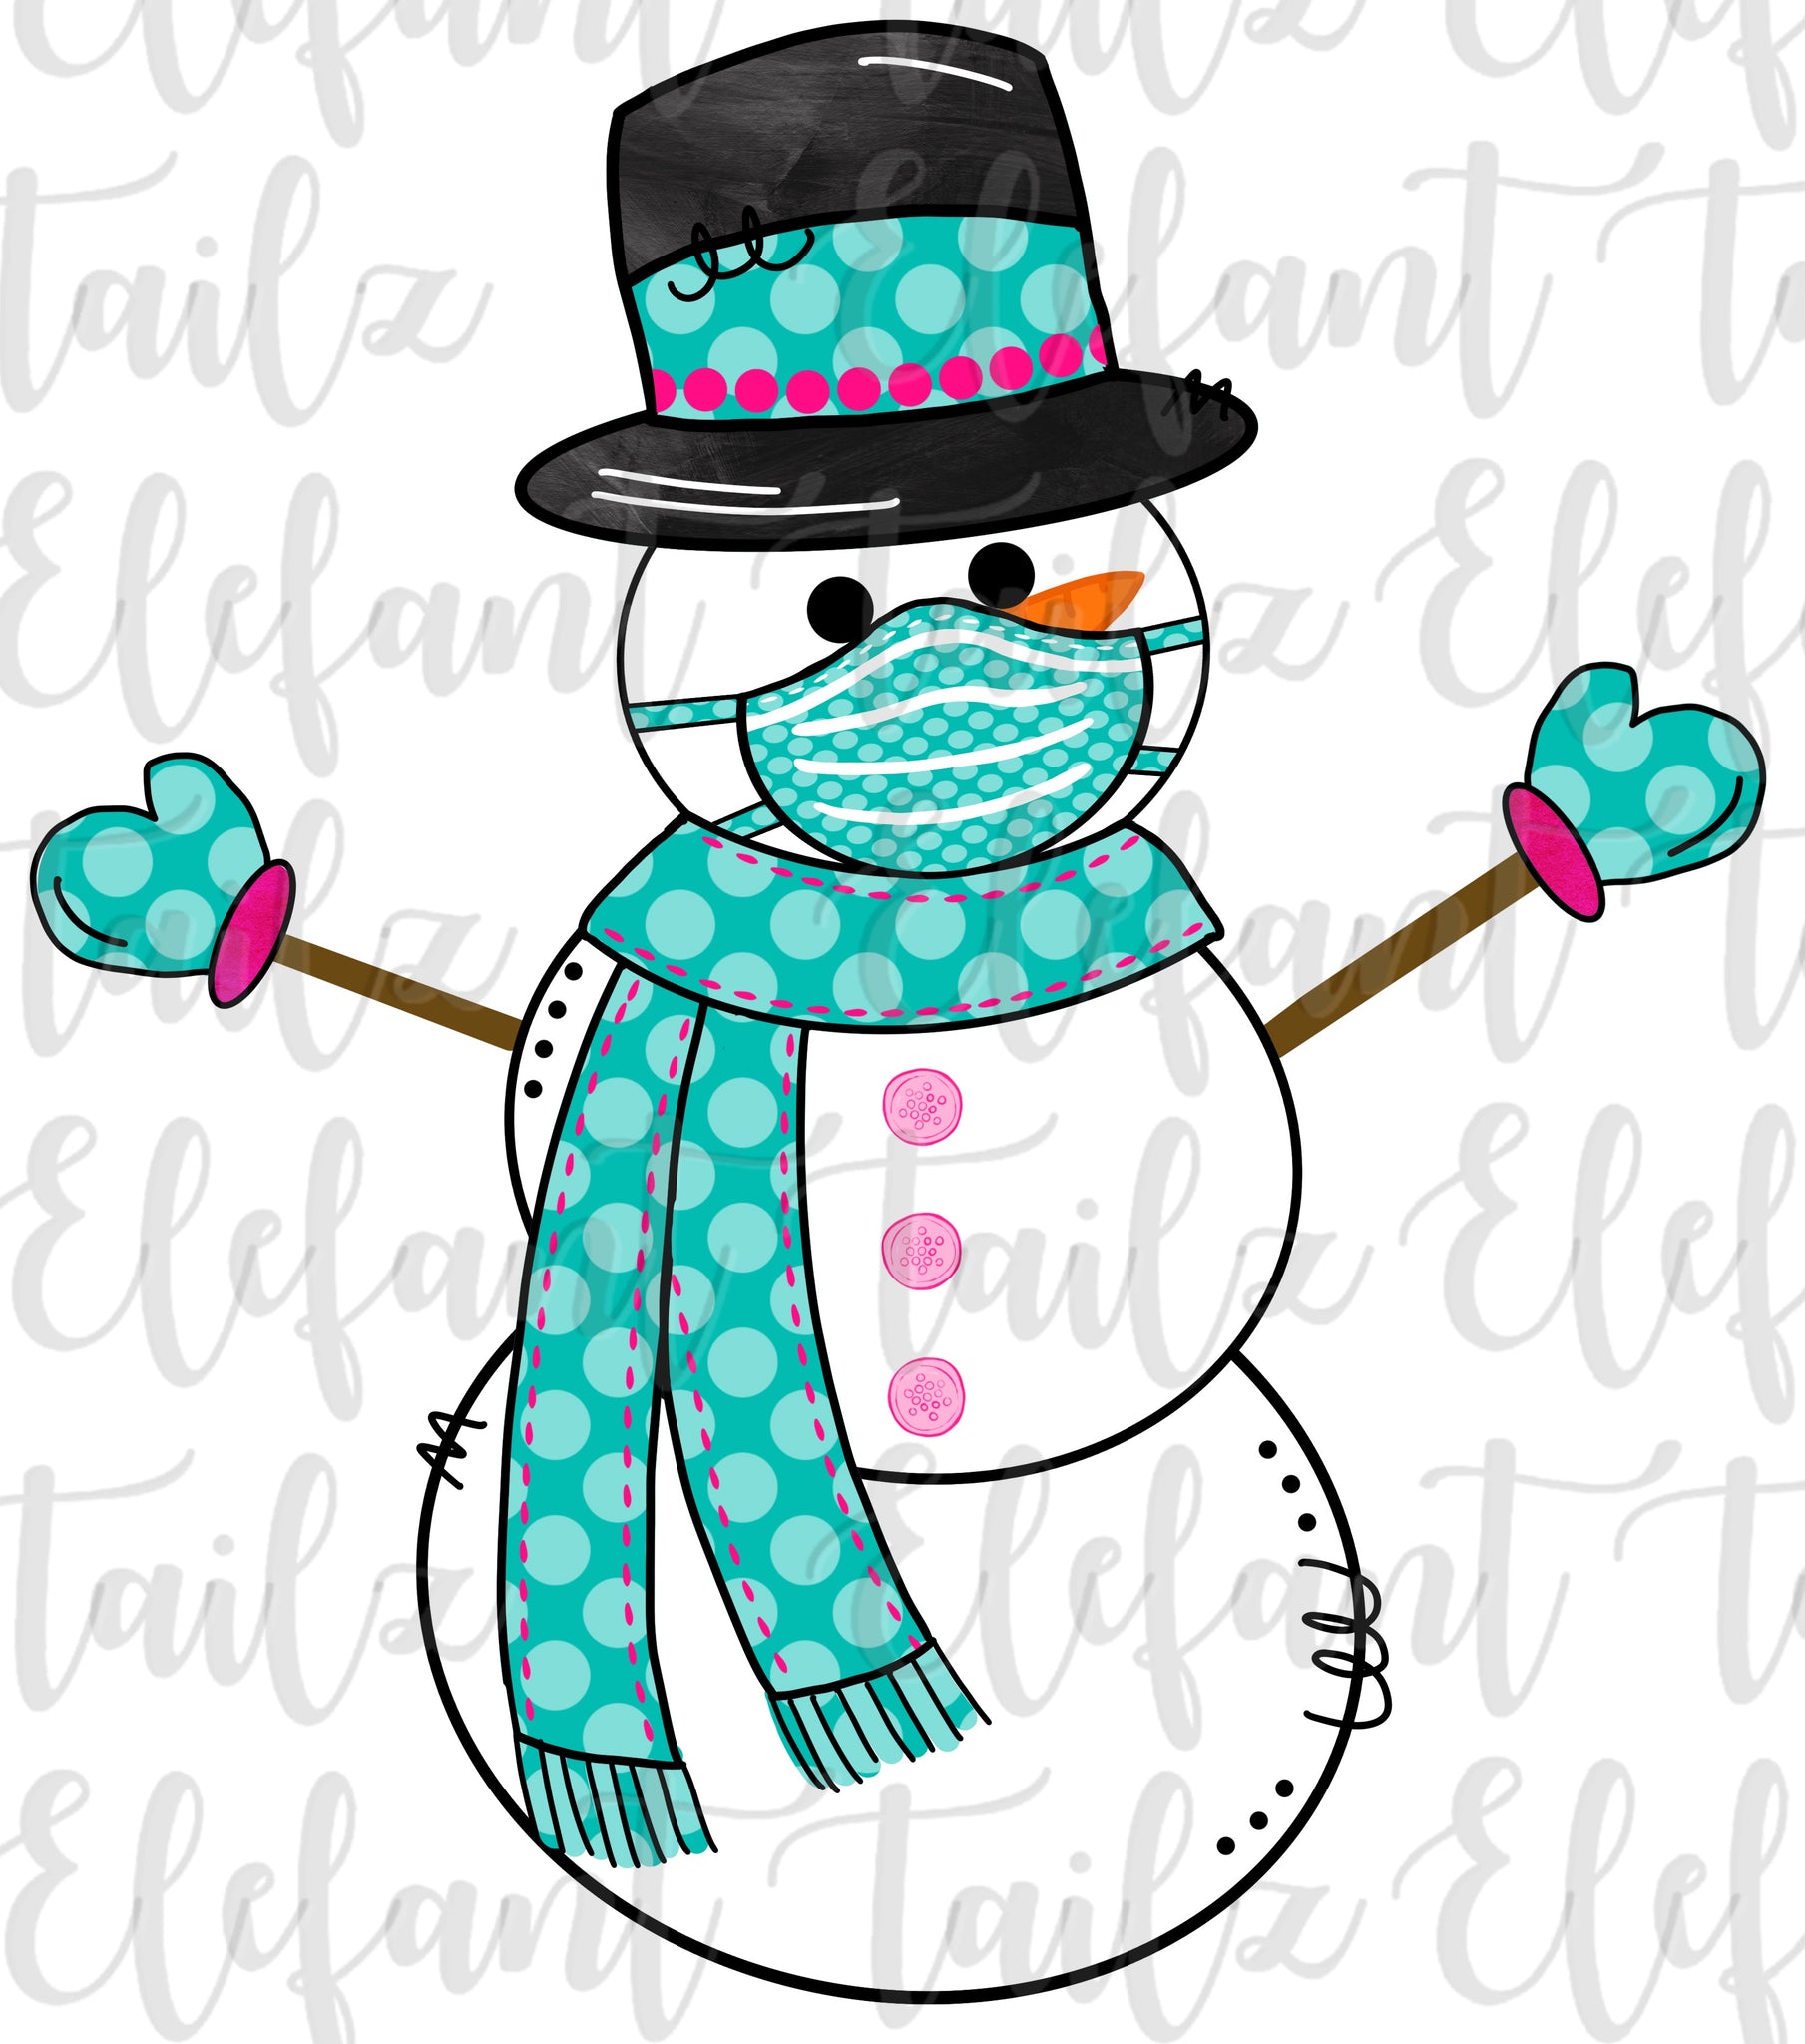 Snowman with Mask - Teal Polka Dot